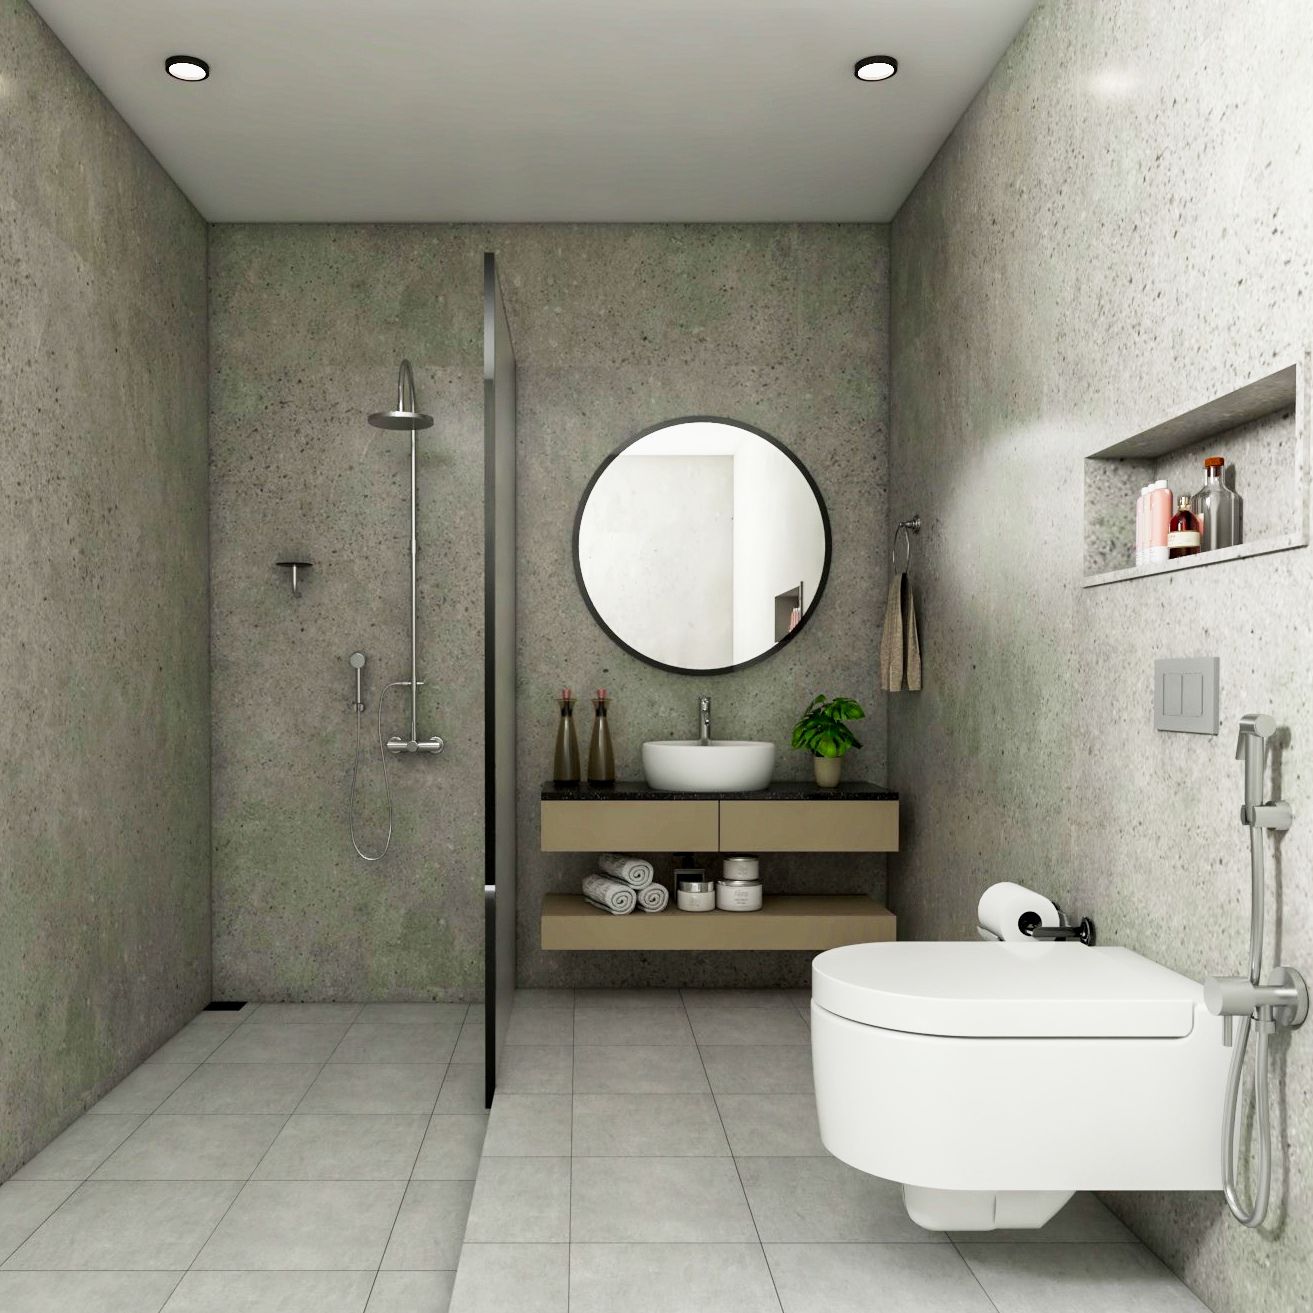 Modern Bathroom Design With Light Grey Wall Tiles